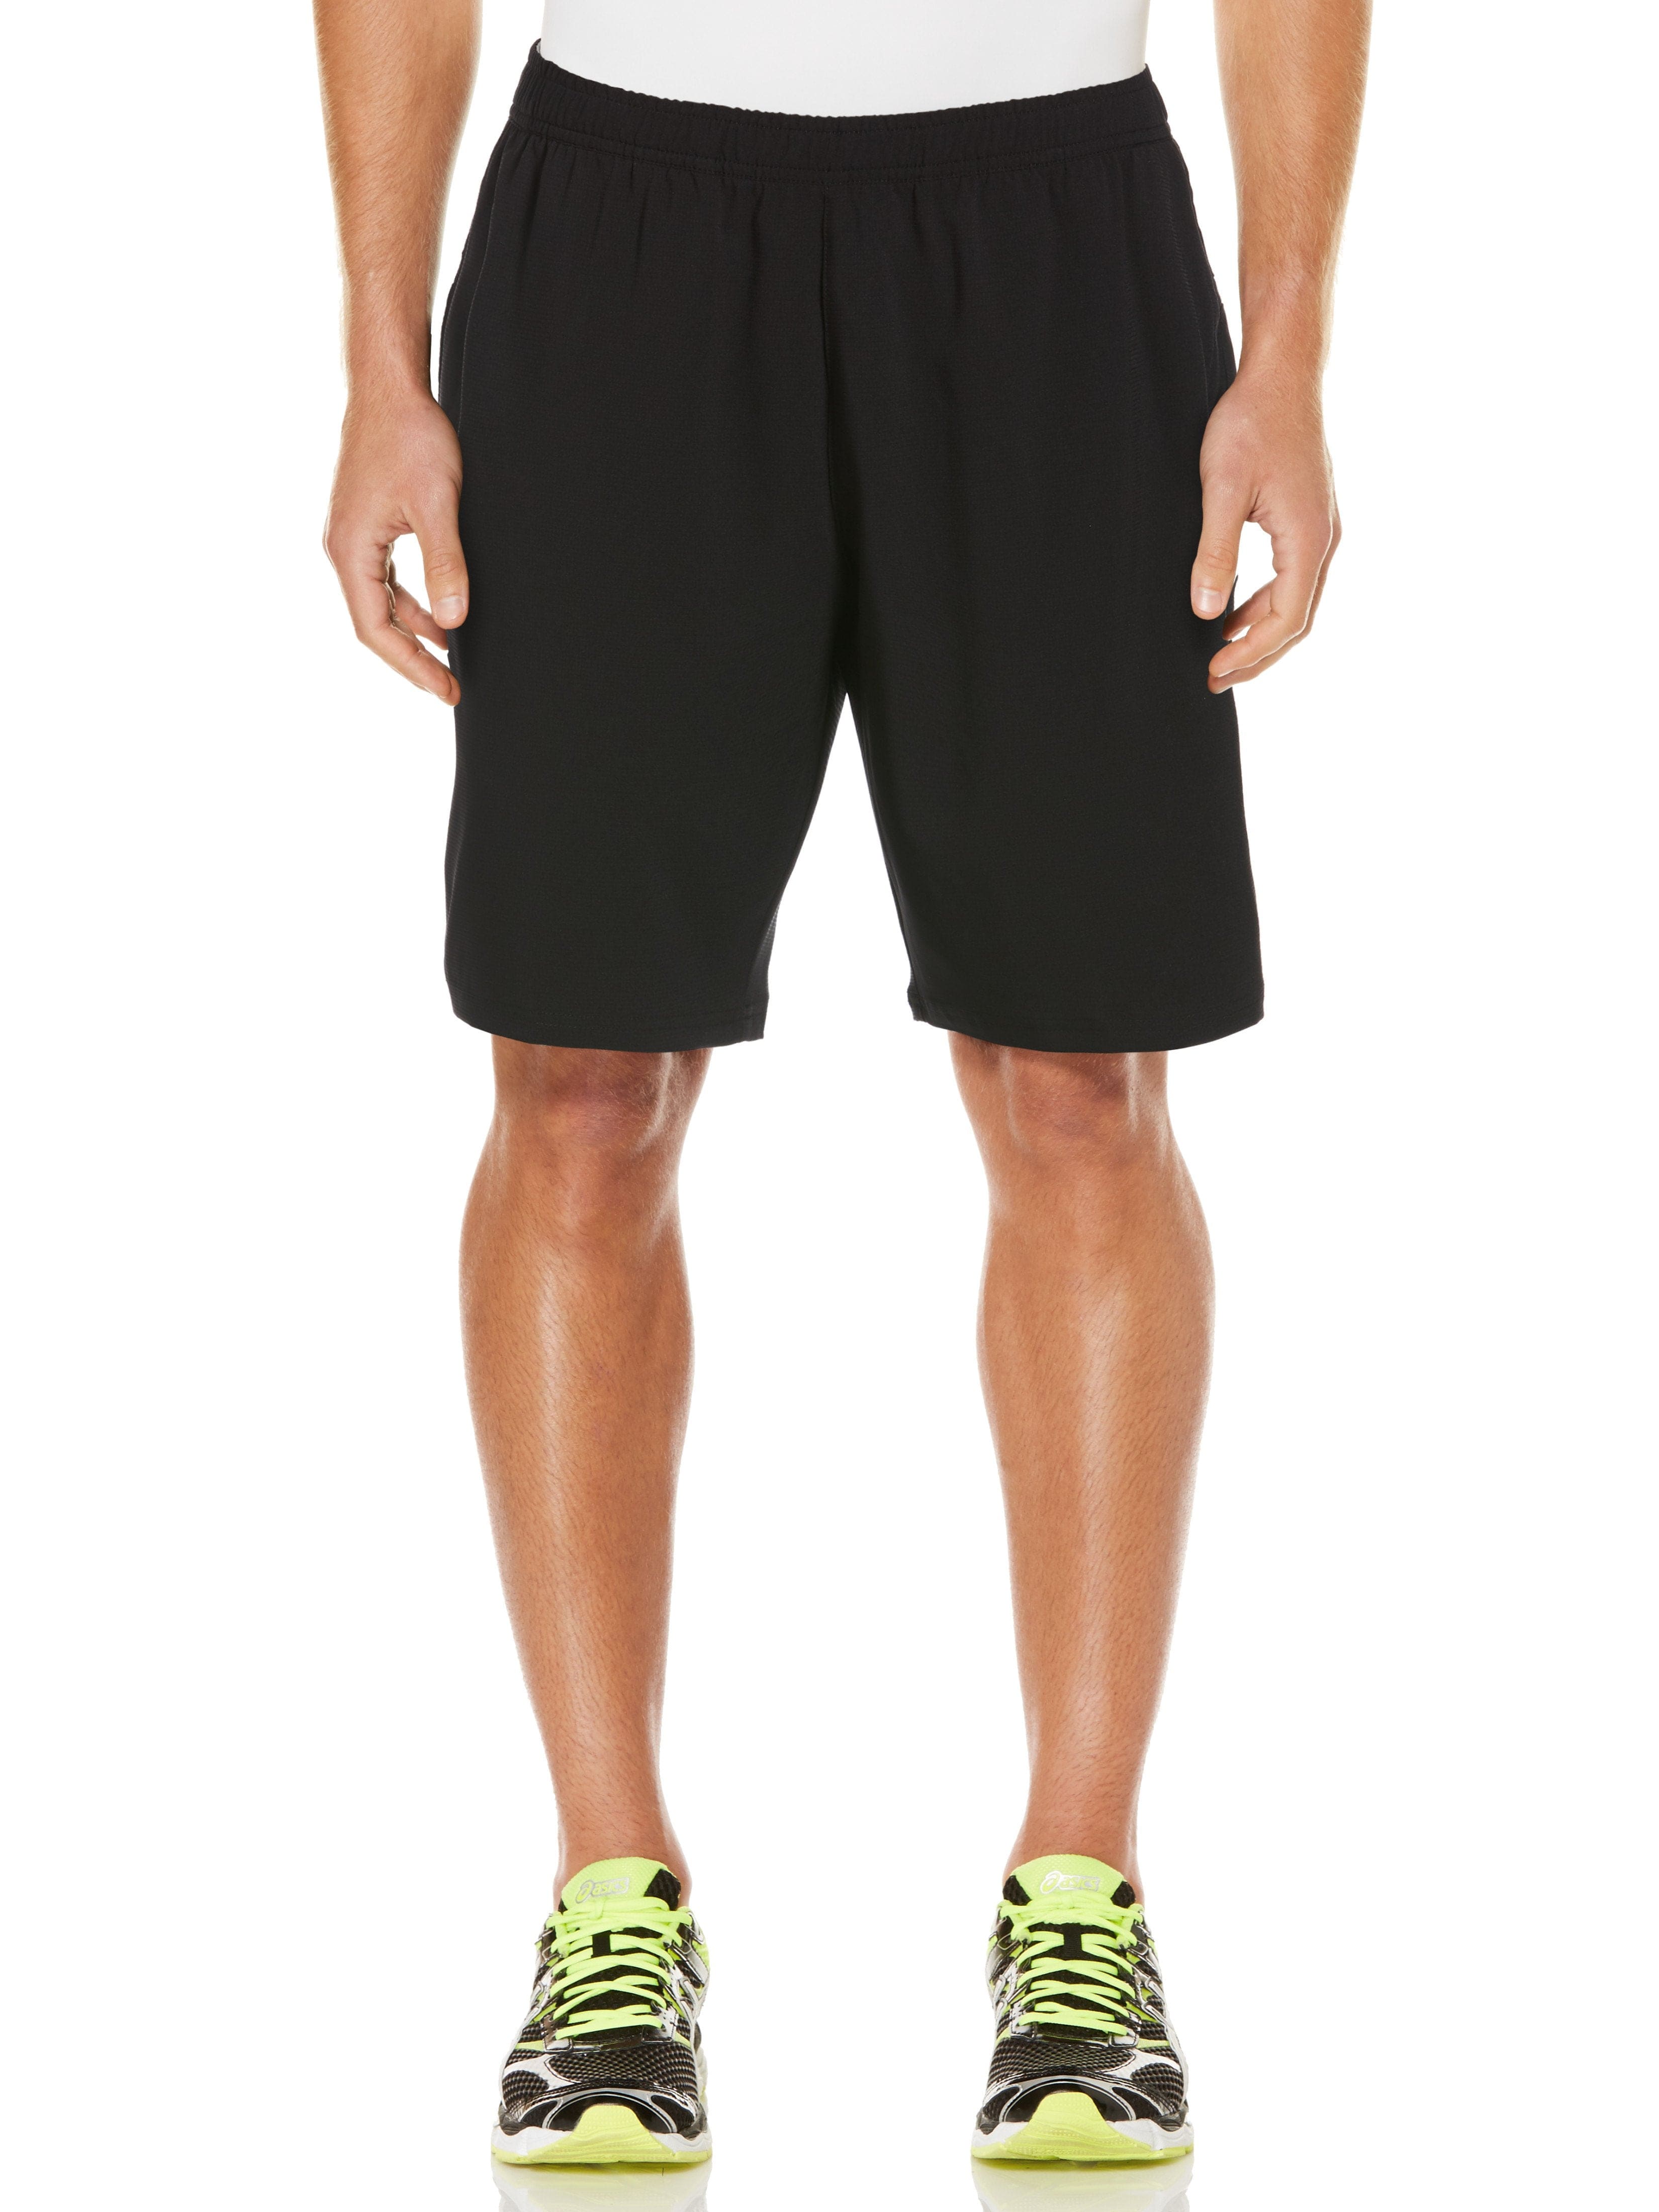 Grand Slam Mens Athletic Shorts, Size 2XL, Black, Polyester/Elastane | Golf Apparel Shop